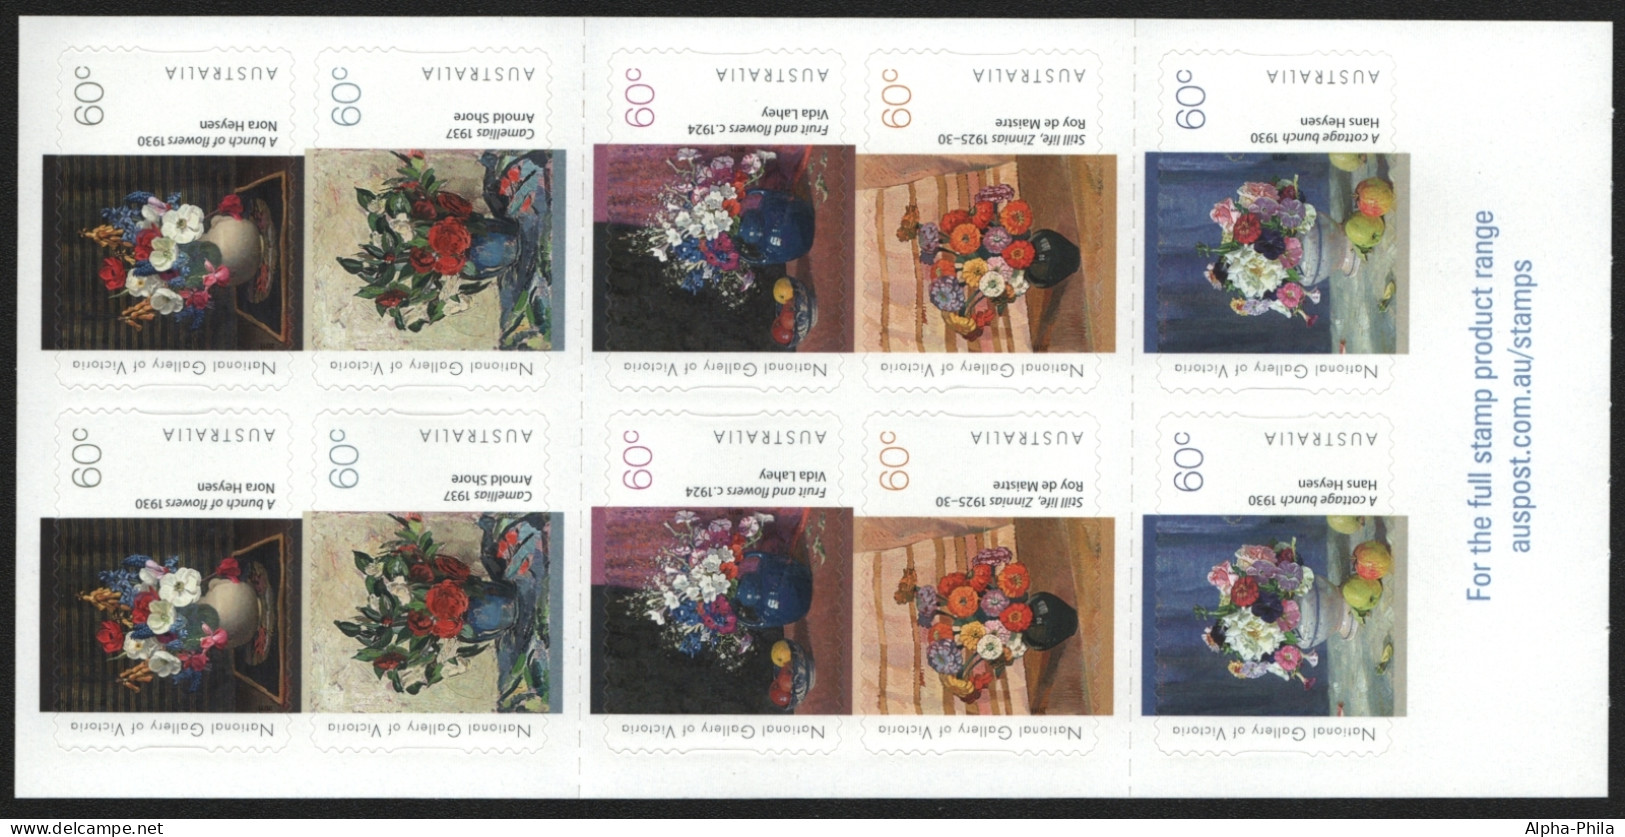 Australien 2011 - Mi-Nr. 3545-3549 ** - MNH - Markenheft 483 - Blumen / Flowers - Mint Stamps